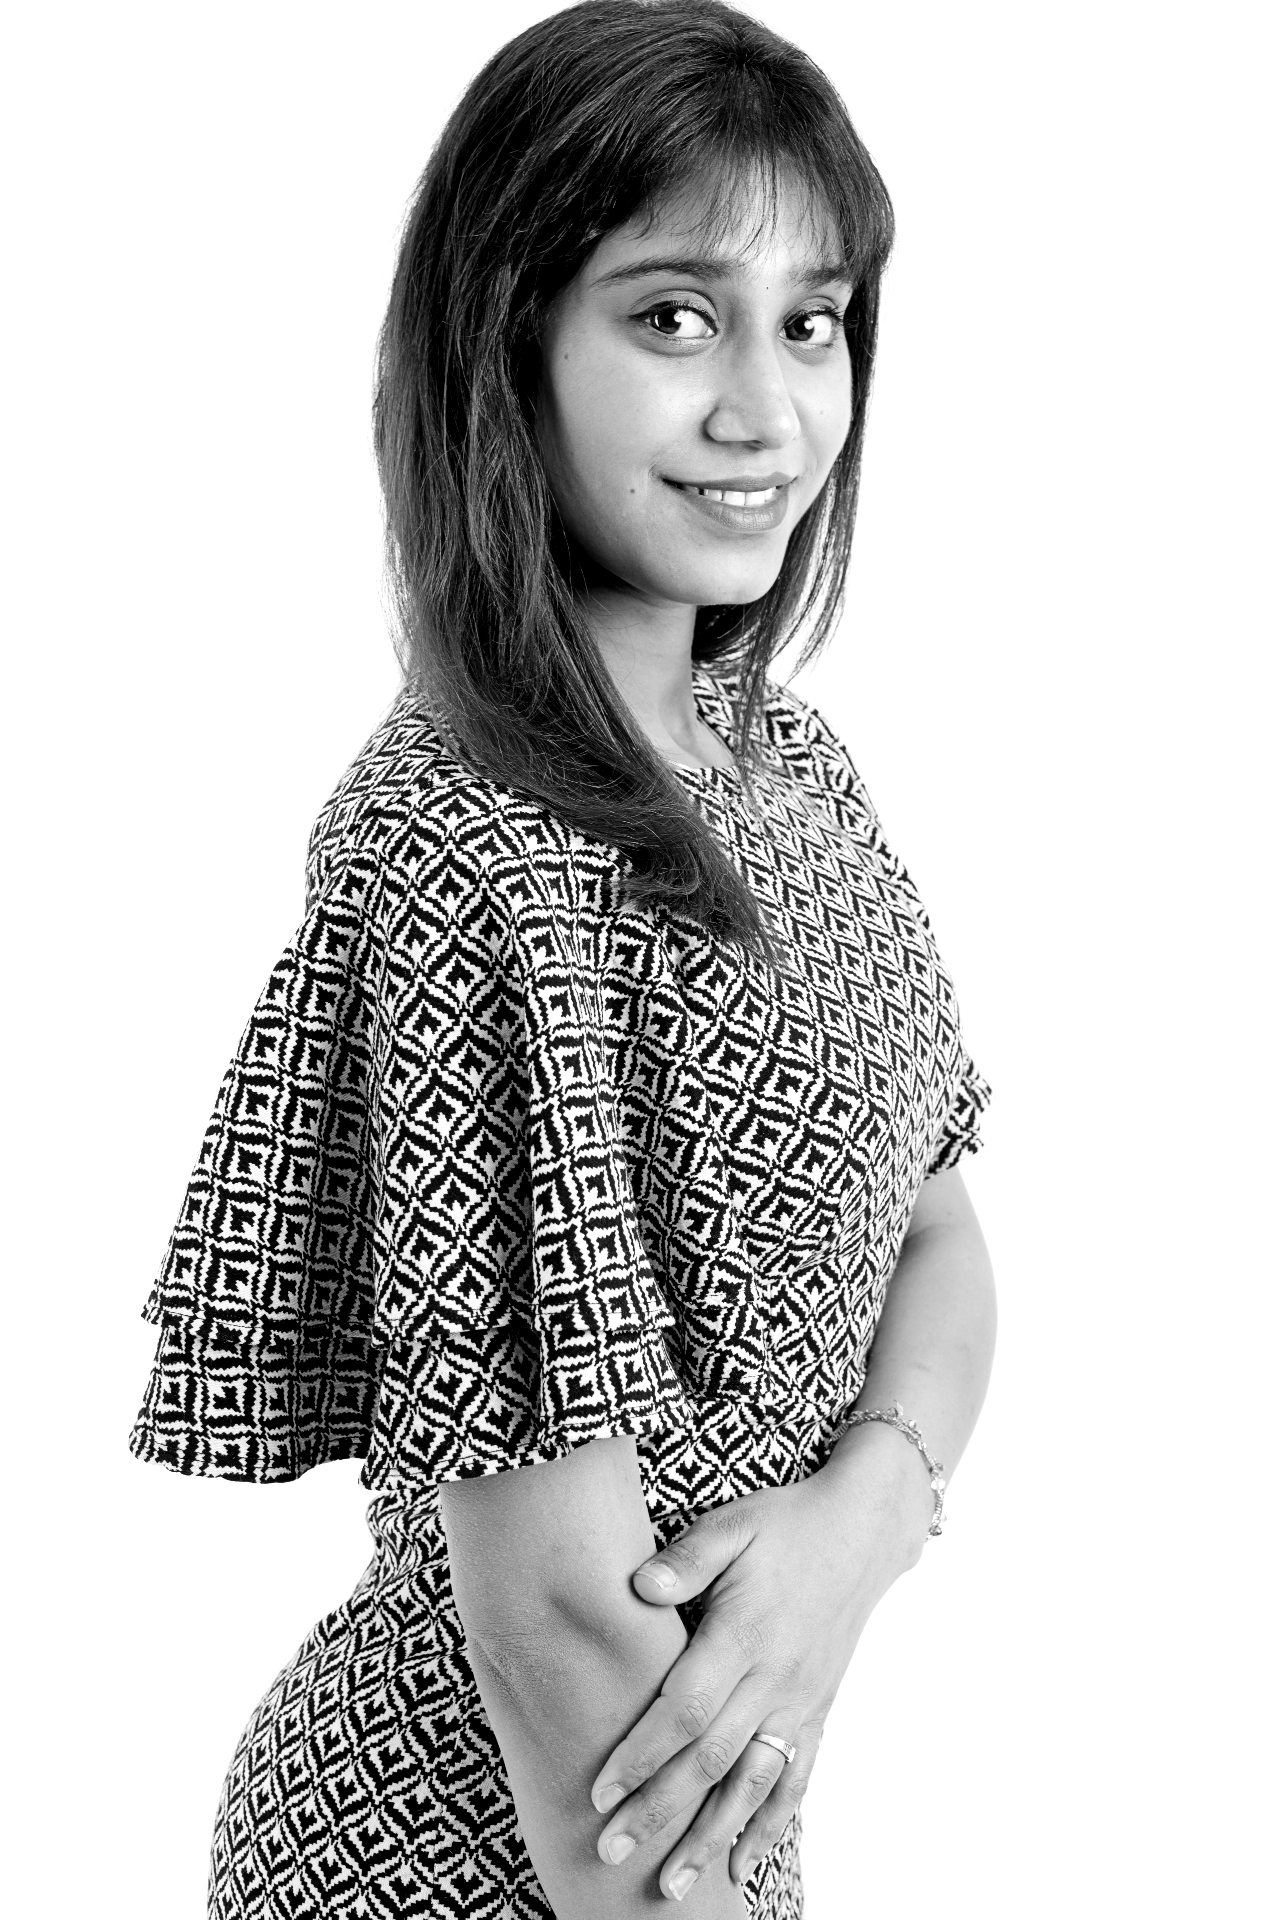 Profile Picture of Amandeep Kaur